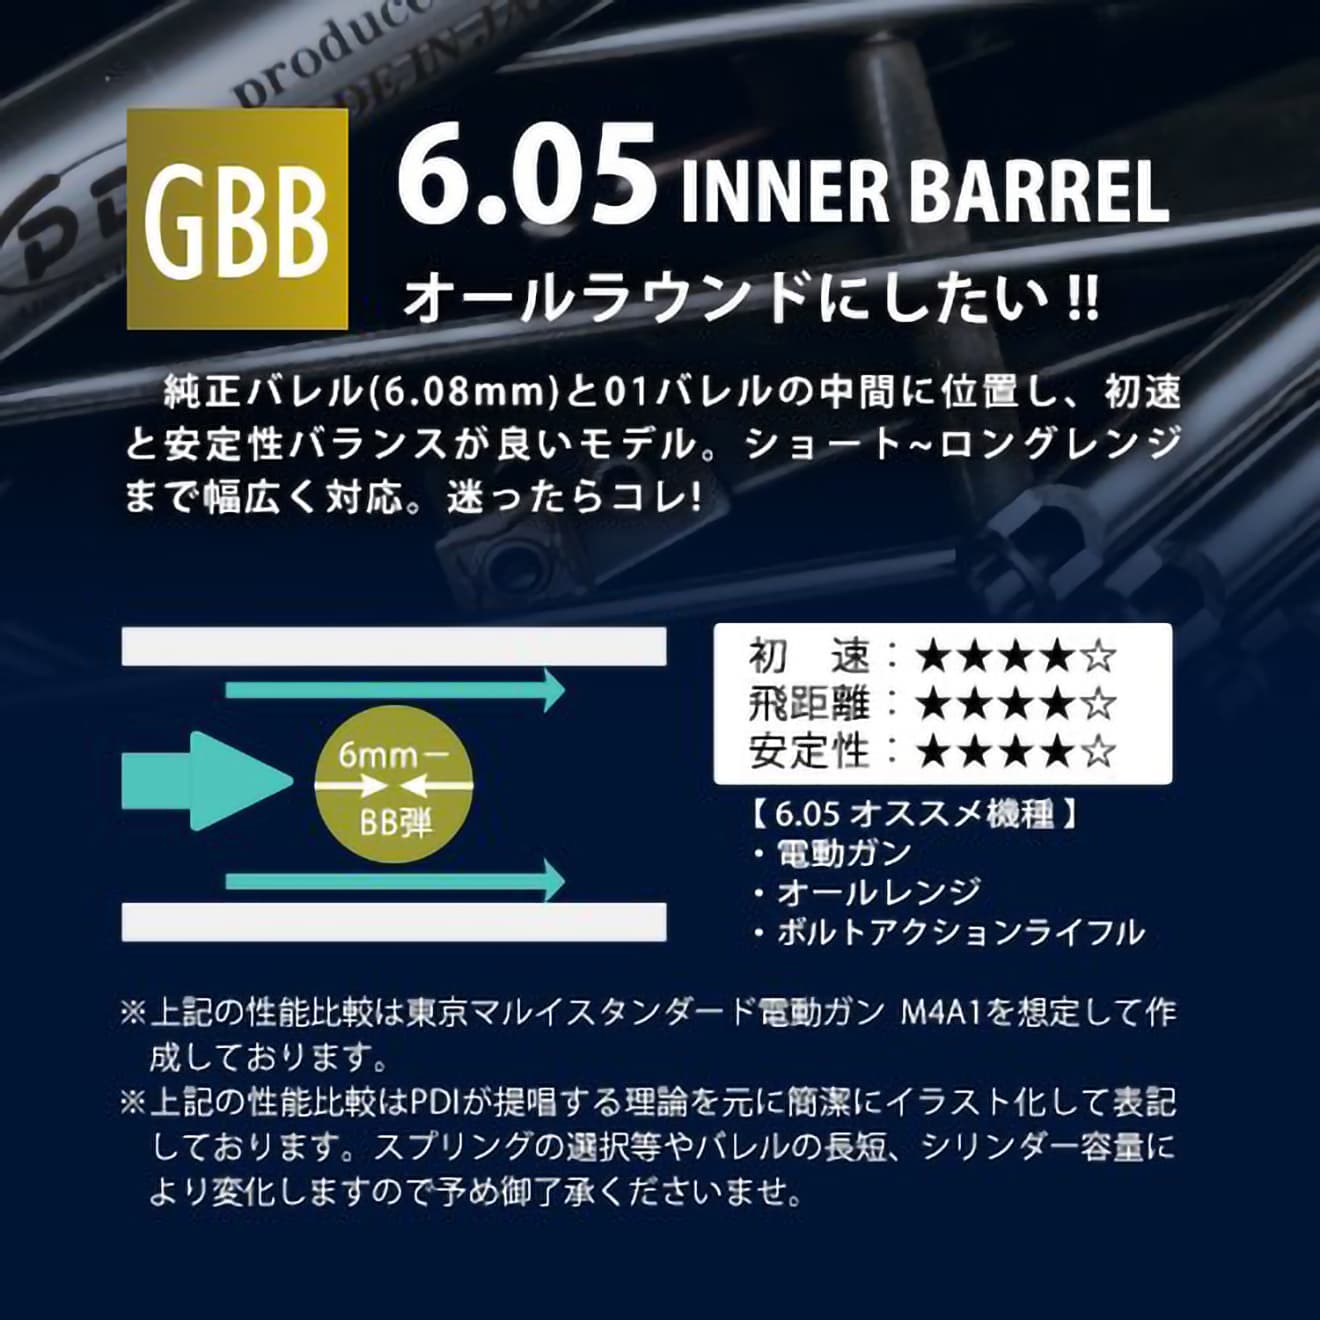 PDI 05シリーズ GBB 超精密ステンレスインナーバレル (6.05±0.002) 133mm 東京マルイ SOCOM Mｋ23